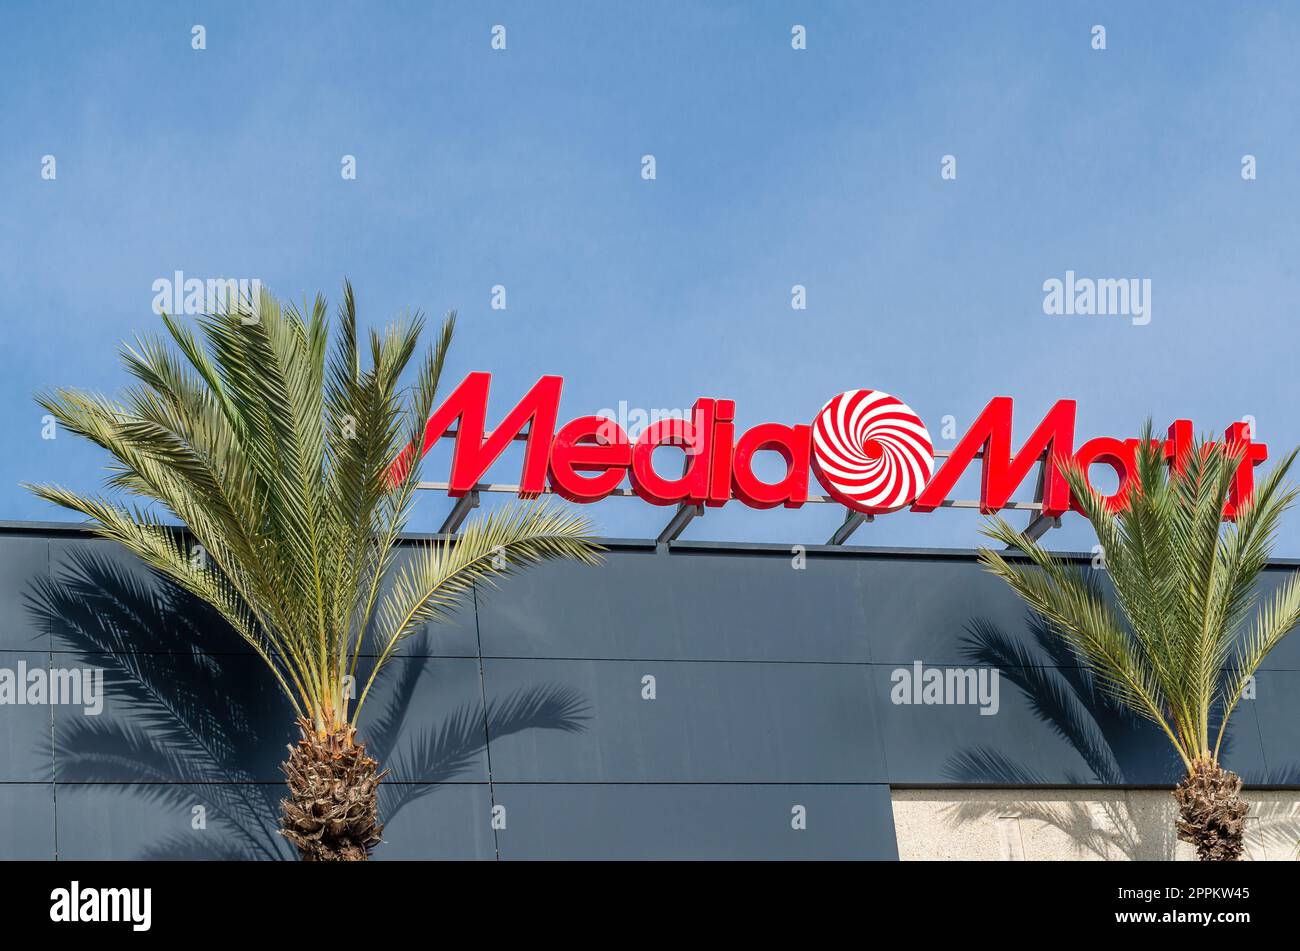 MARBELLA, ESPAGNE - 11 OCTOBRE 2021 : façade d'un magasin Media Markt à Marbella, Espagne. Media Markt est une chaîne de magasins vendant des produits électroniques grand public Banque D'Images